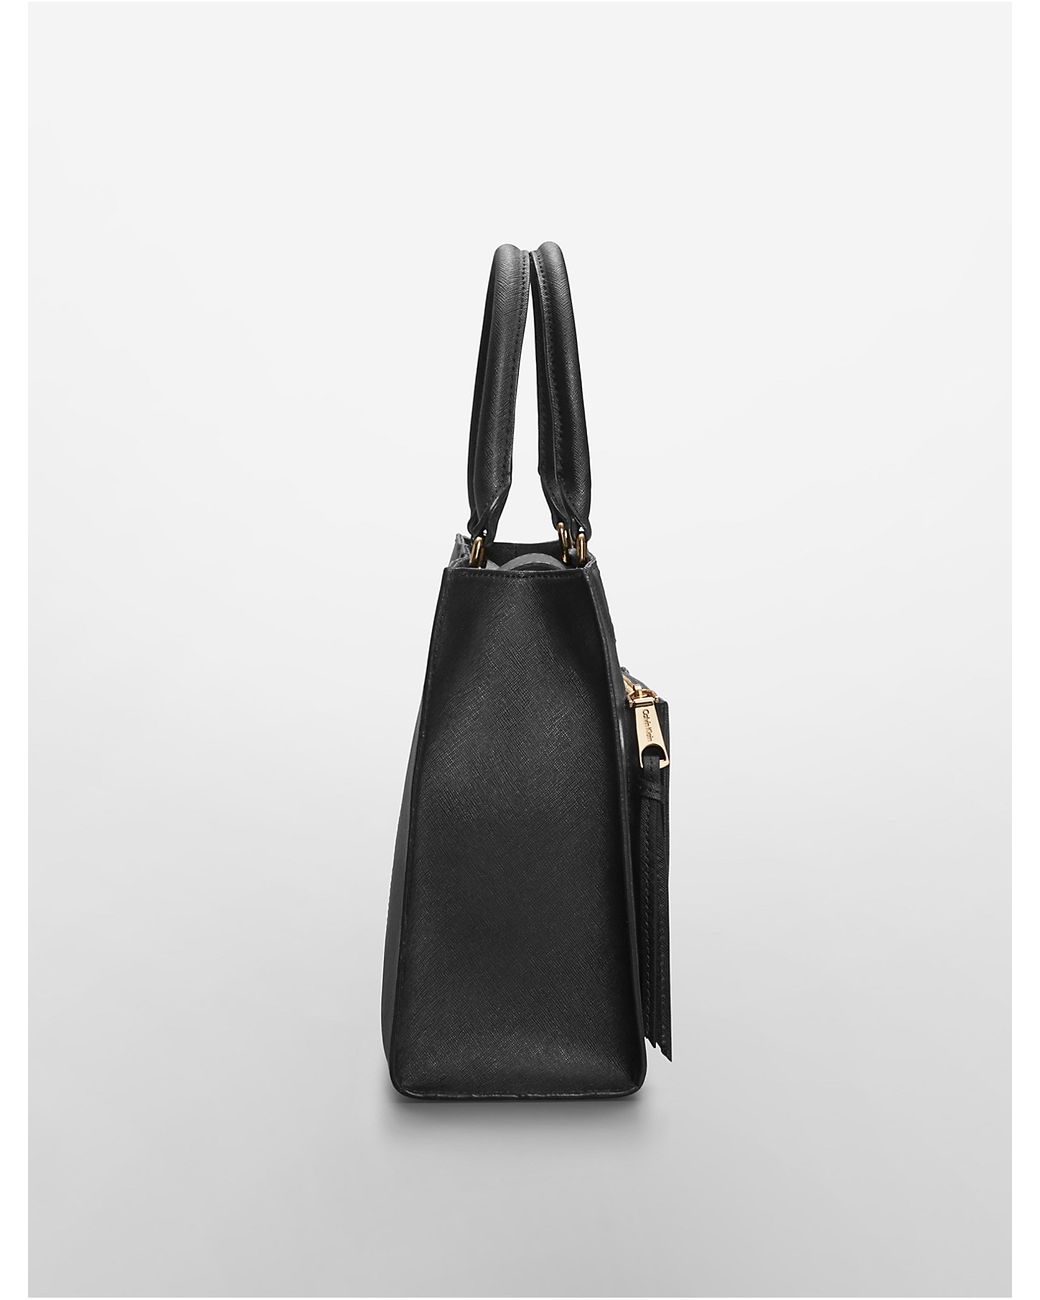 vod perspectief Op te slaan Calvin Klein Saffiano Leather Small Tote Bag in Black | Lyst